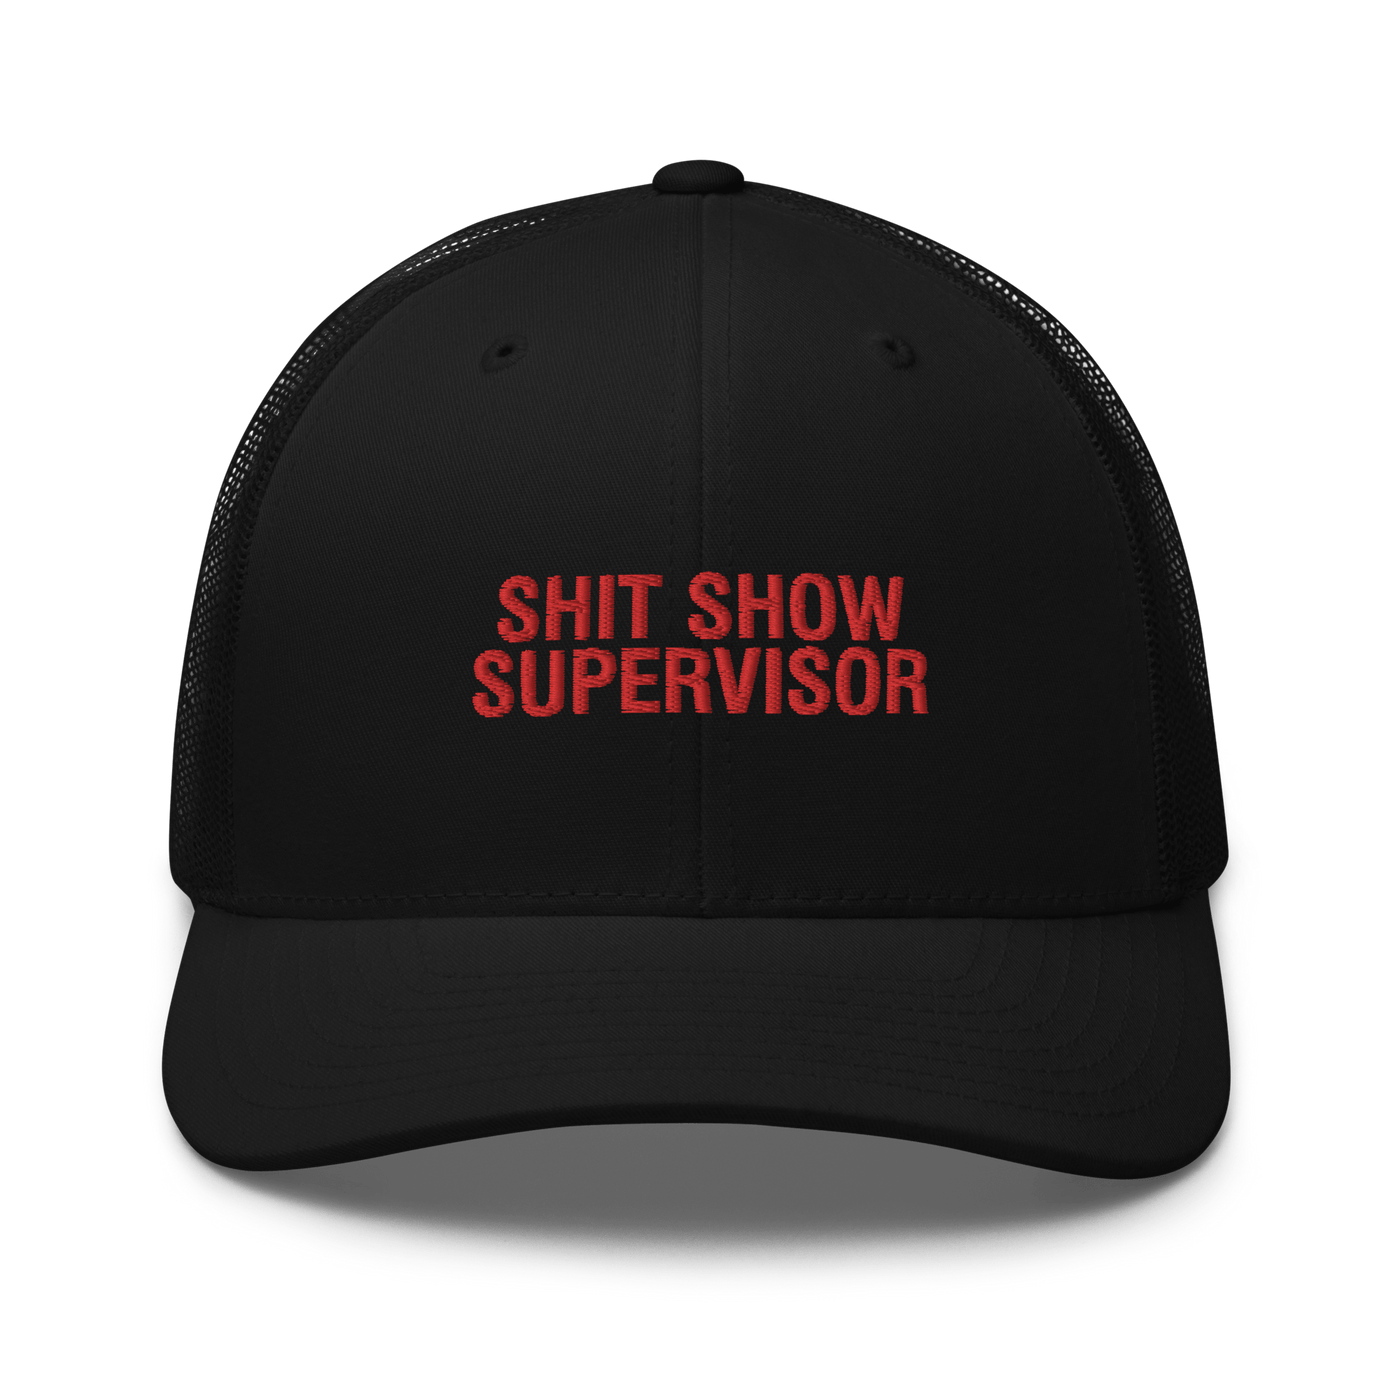 Shit Show Supervisor Trucker Cap - Black - Just Another Cap Store